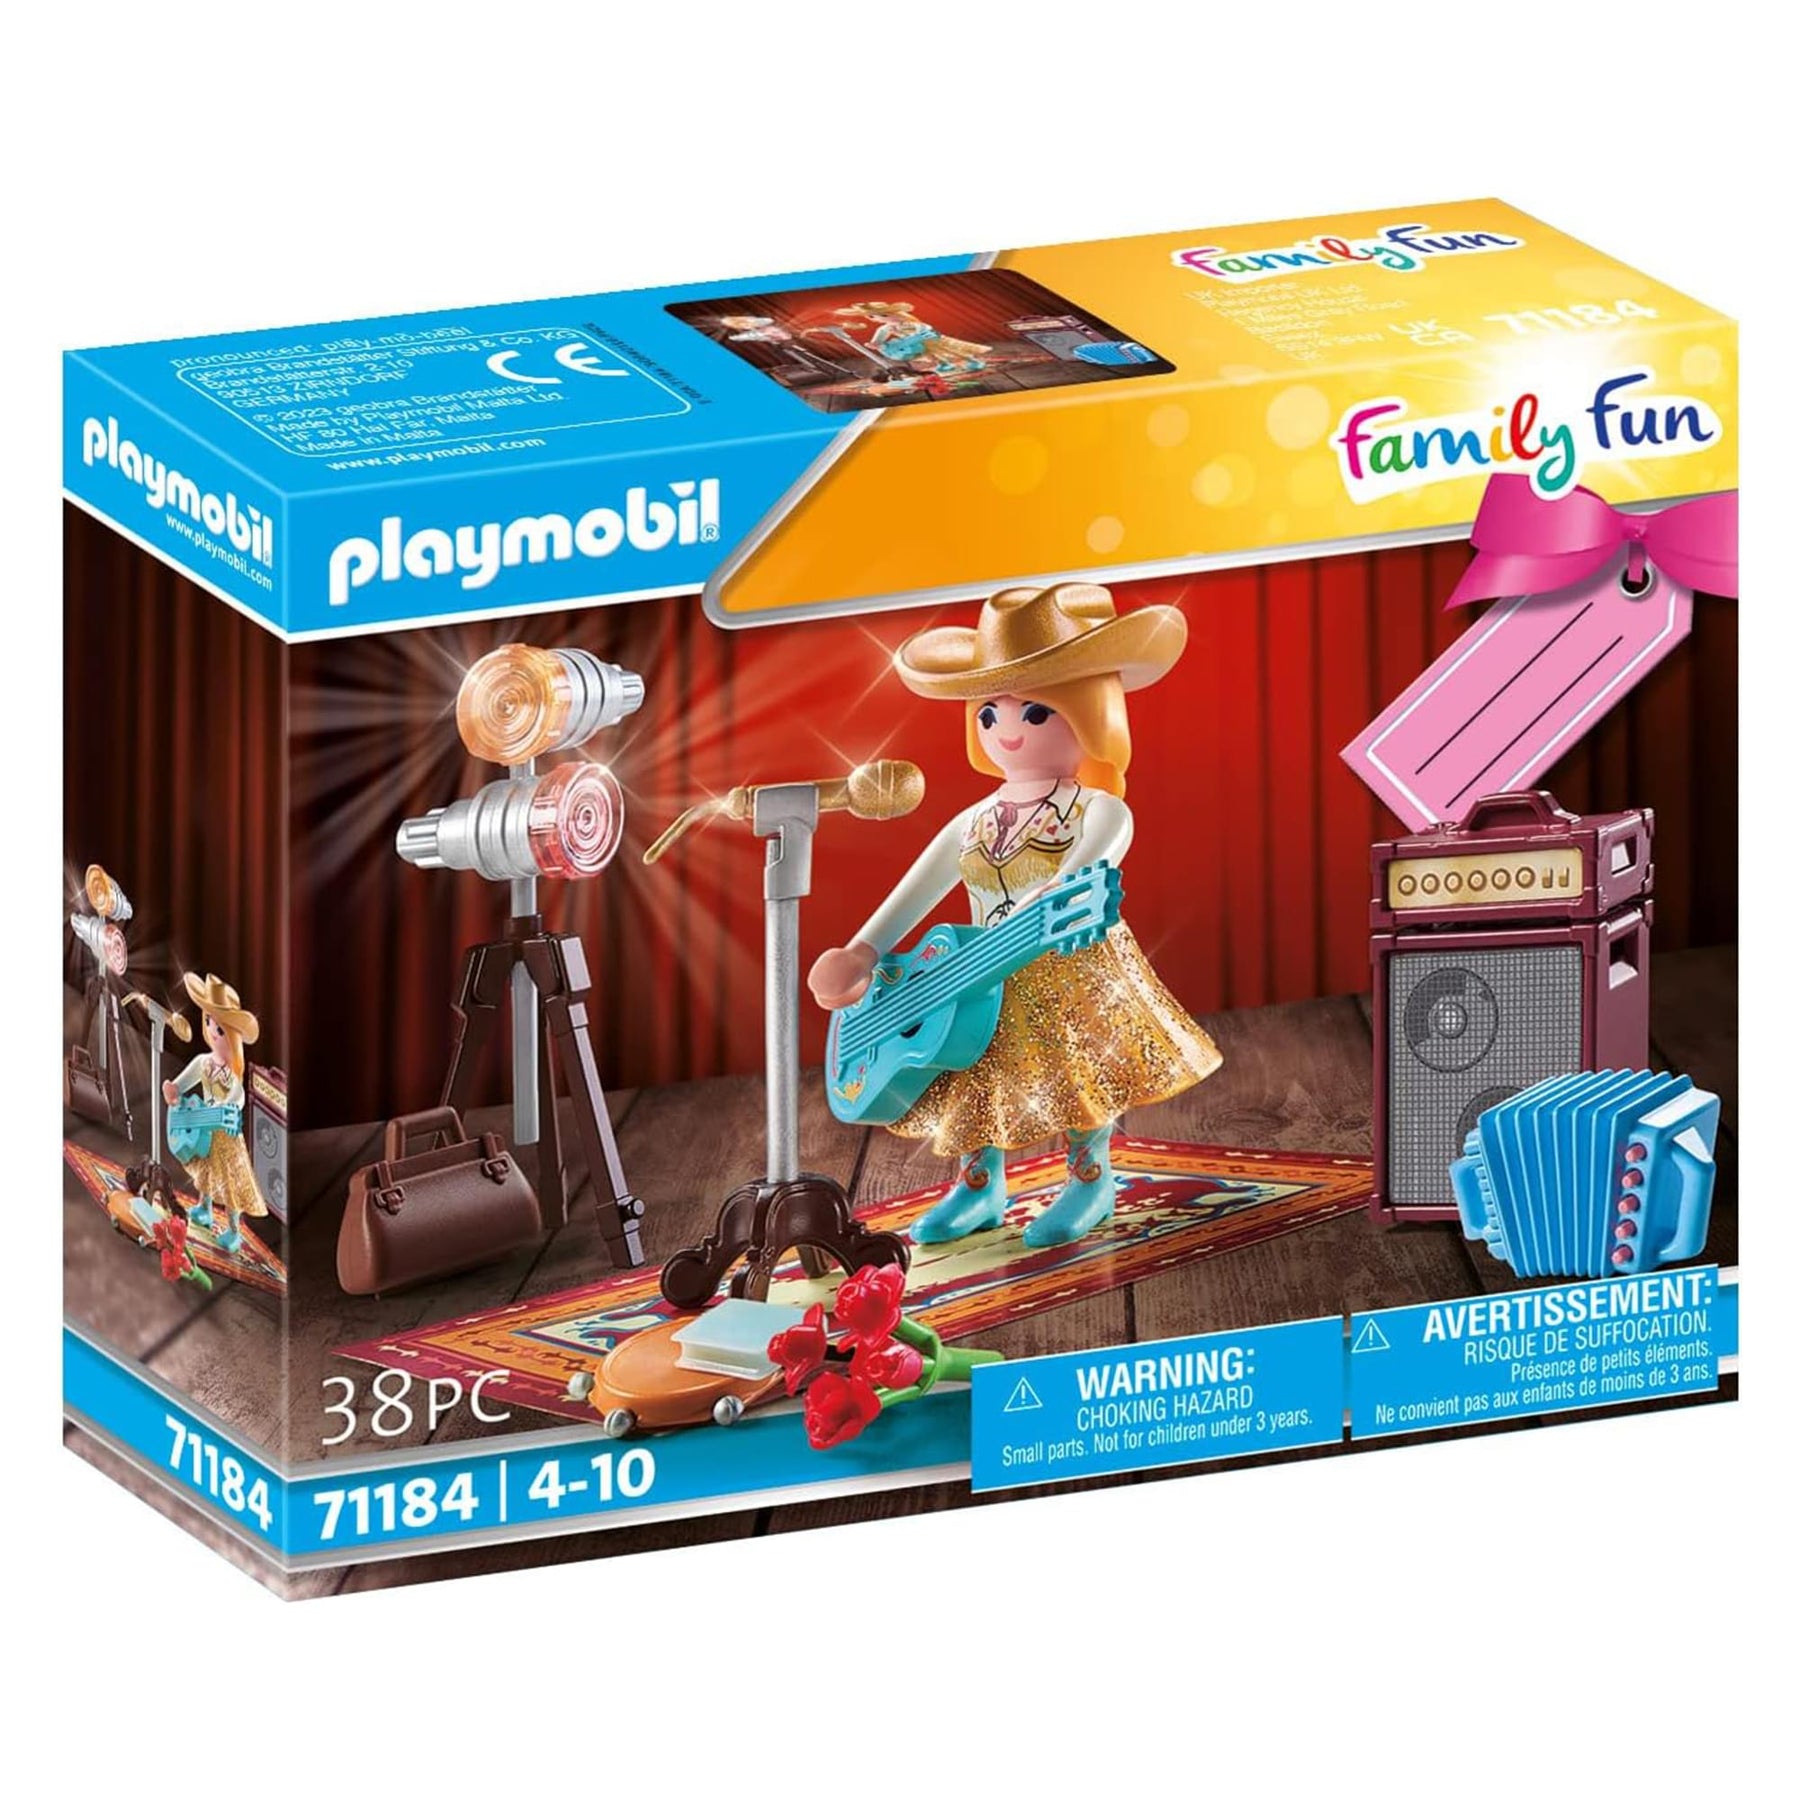 Playmobil 71184 Family Fun Country Singer Building Set